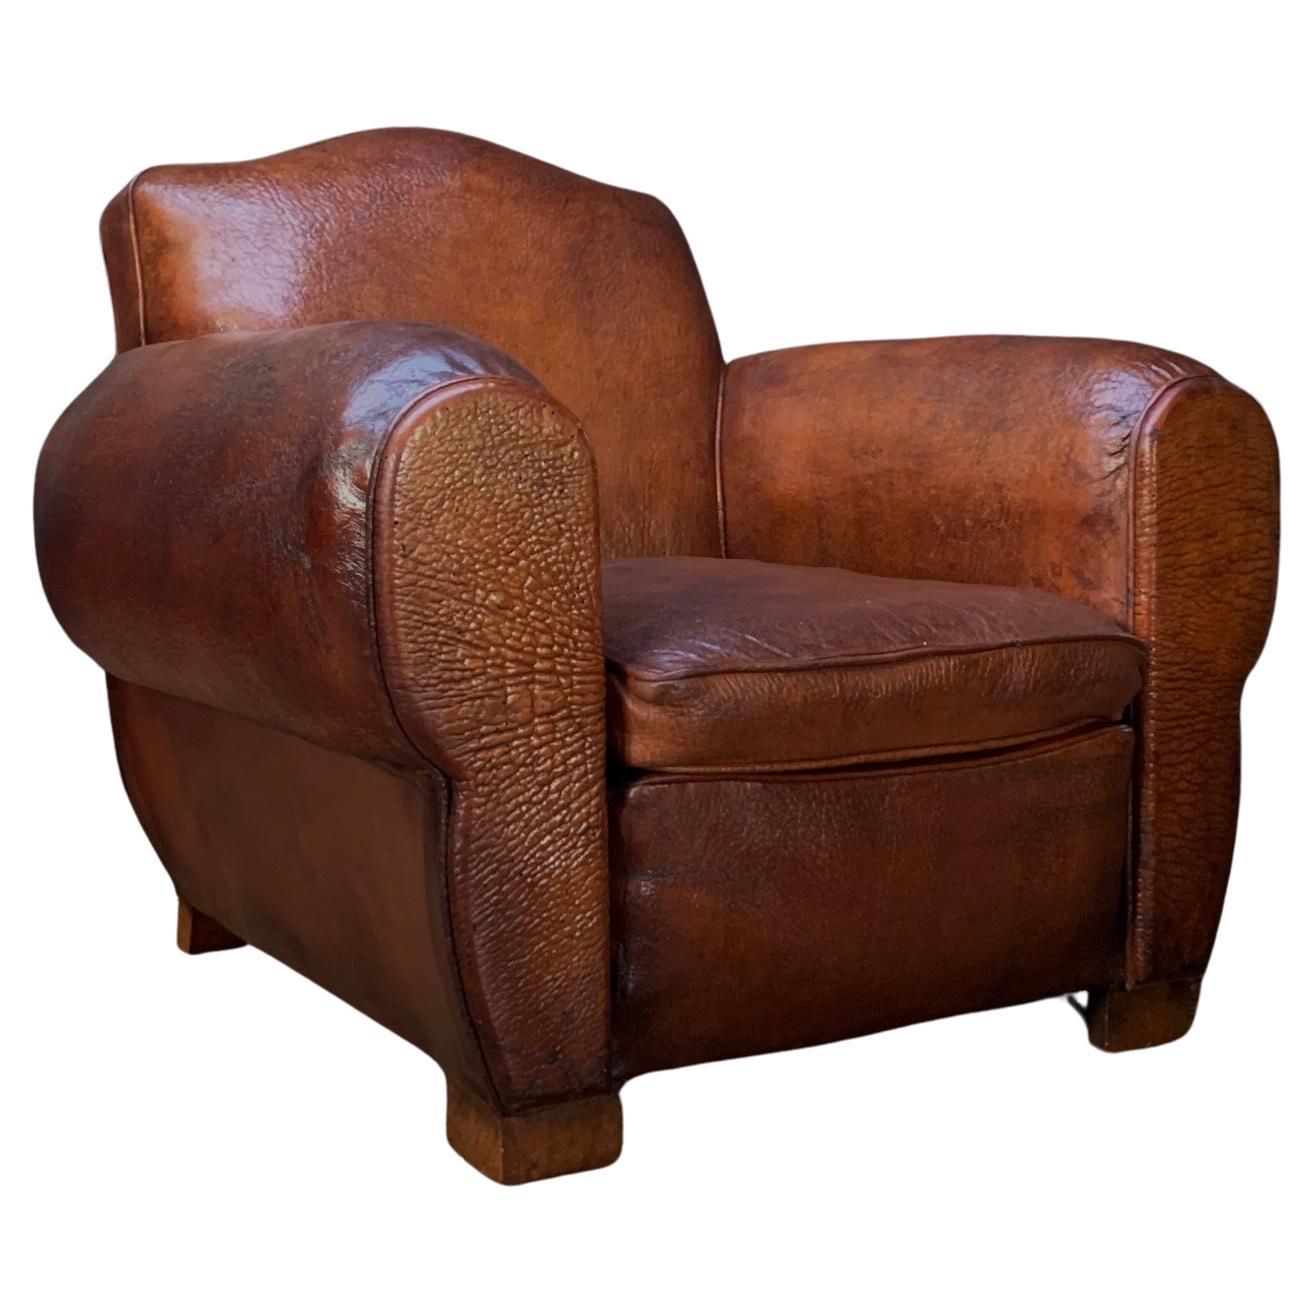 An Impressive French Leather Club Chair, Chapeau du Gendarme Model, Circa 1920's